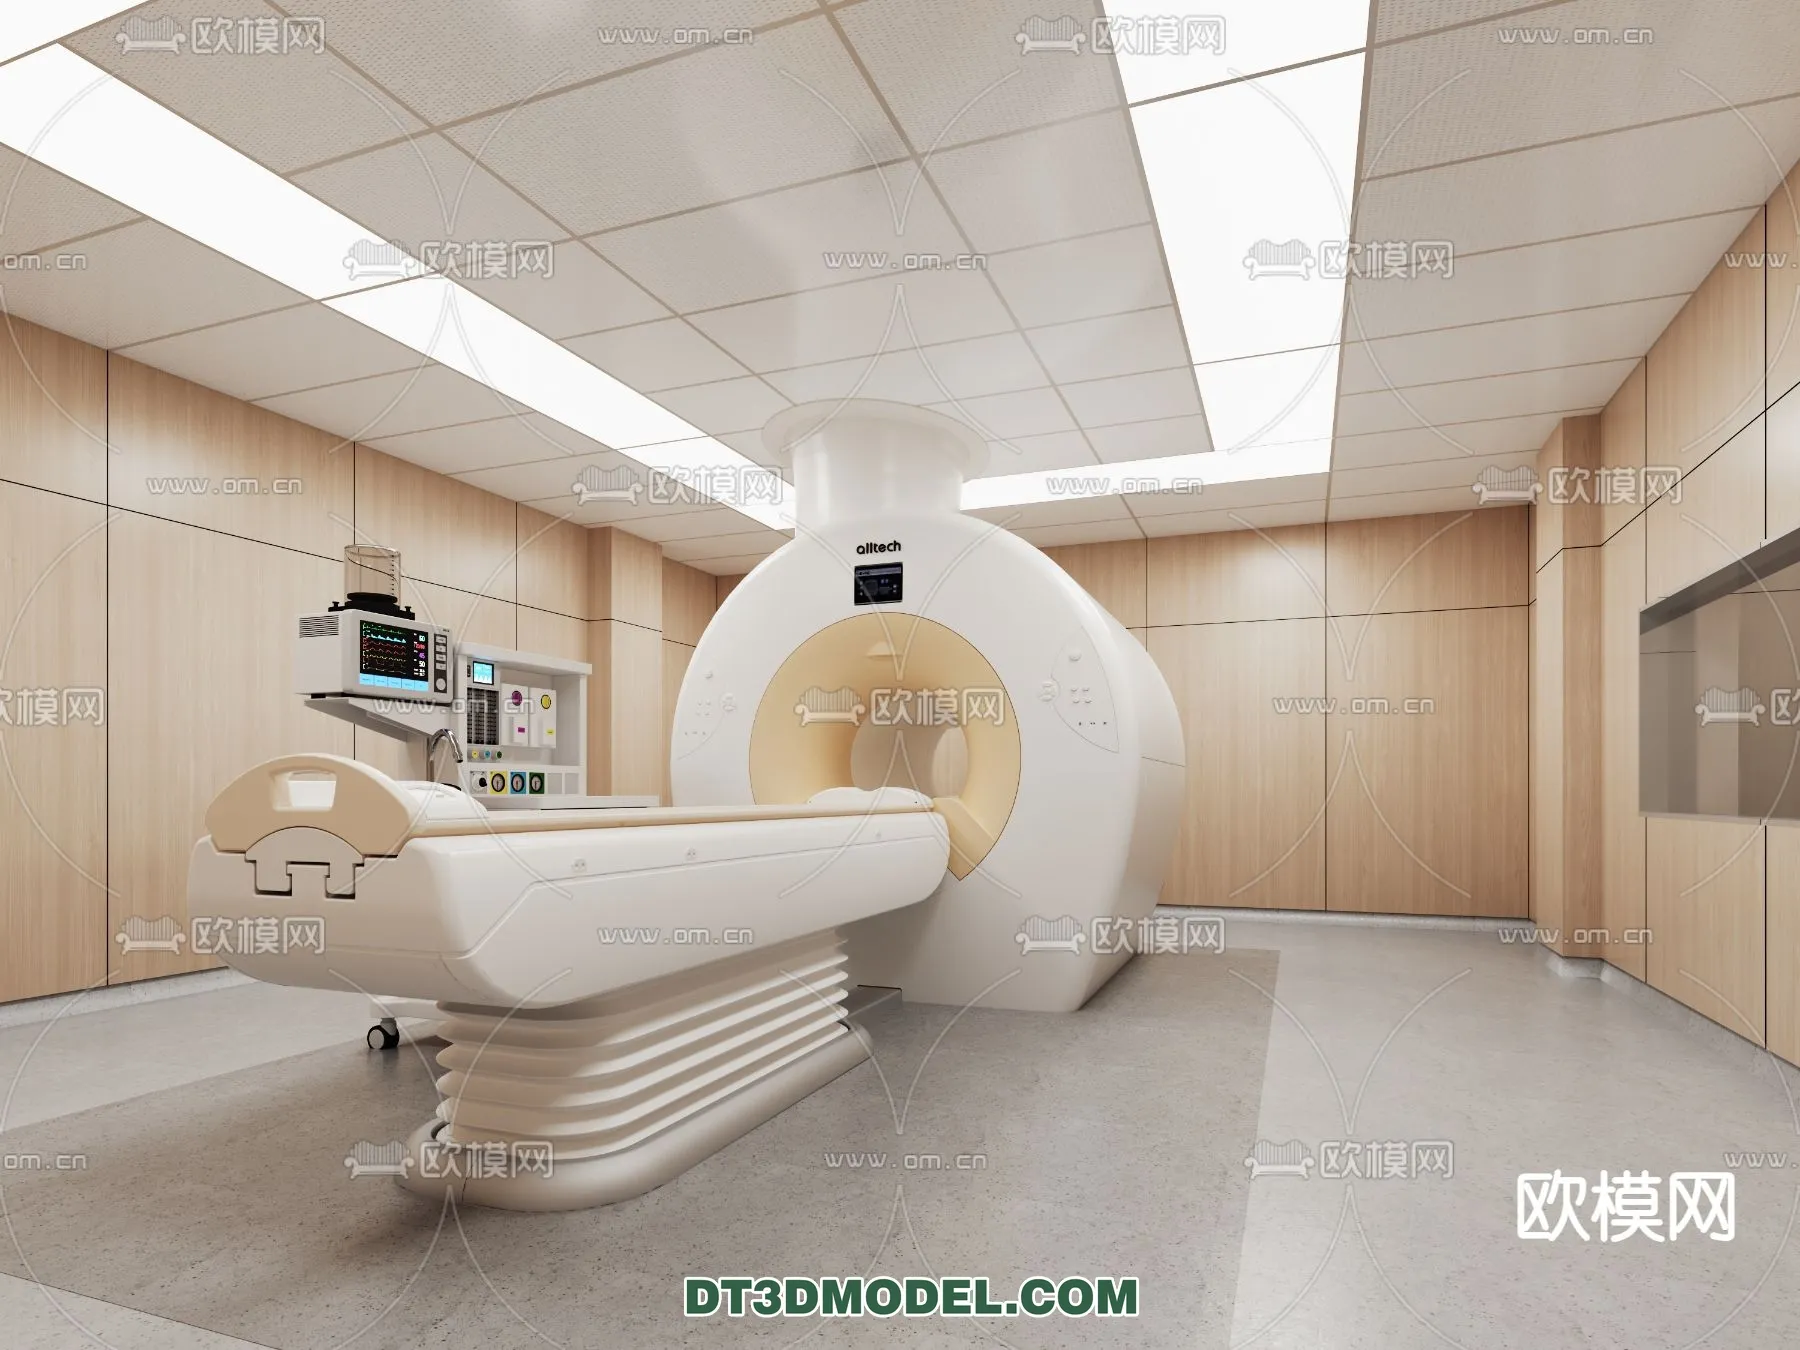 HOSPITAL 3D SCENES – MODERN – 0189